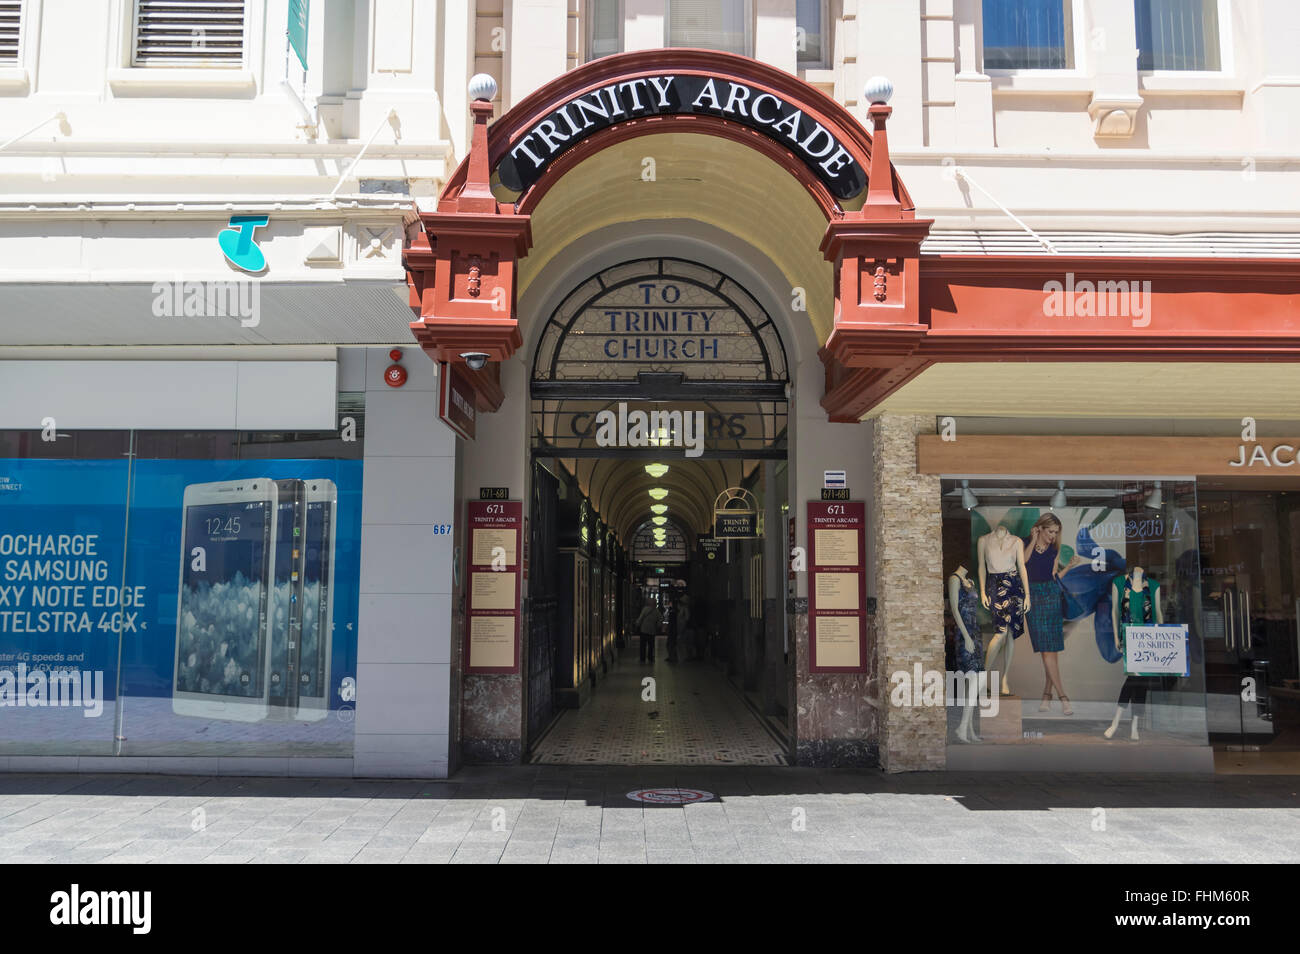 Entrance to Trinity Arcade shopping precinct on Hay Street, Perth, Western Australia. Stock Photo